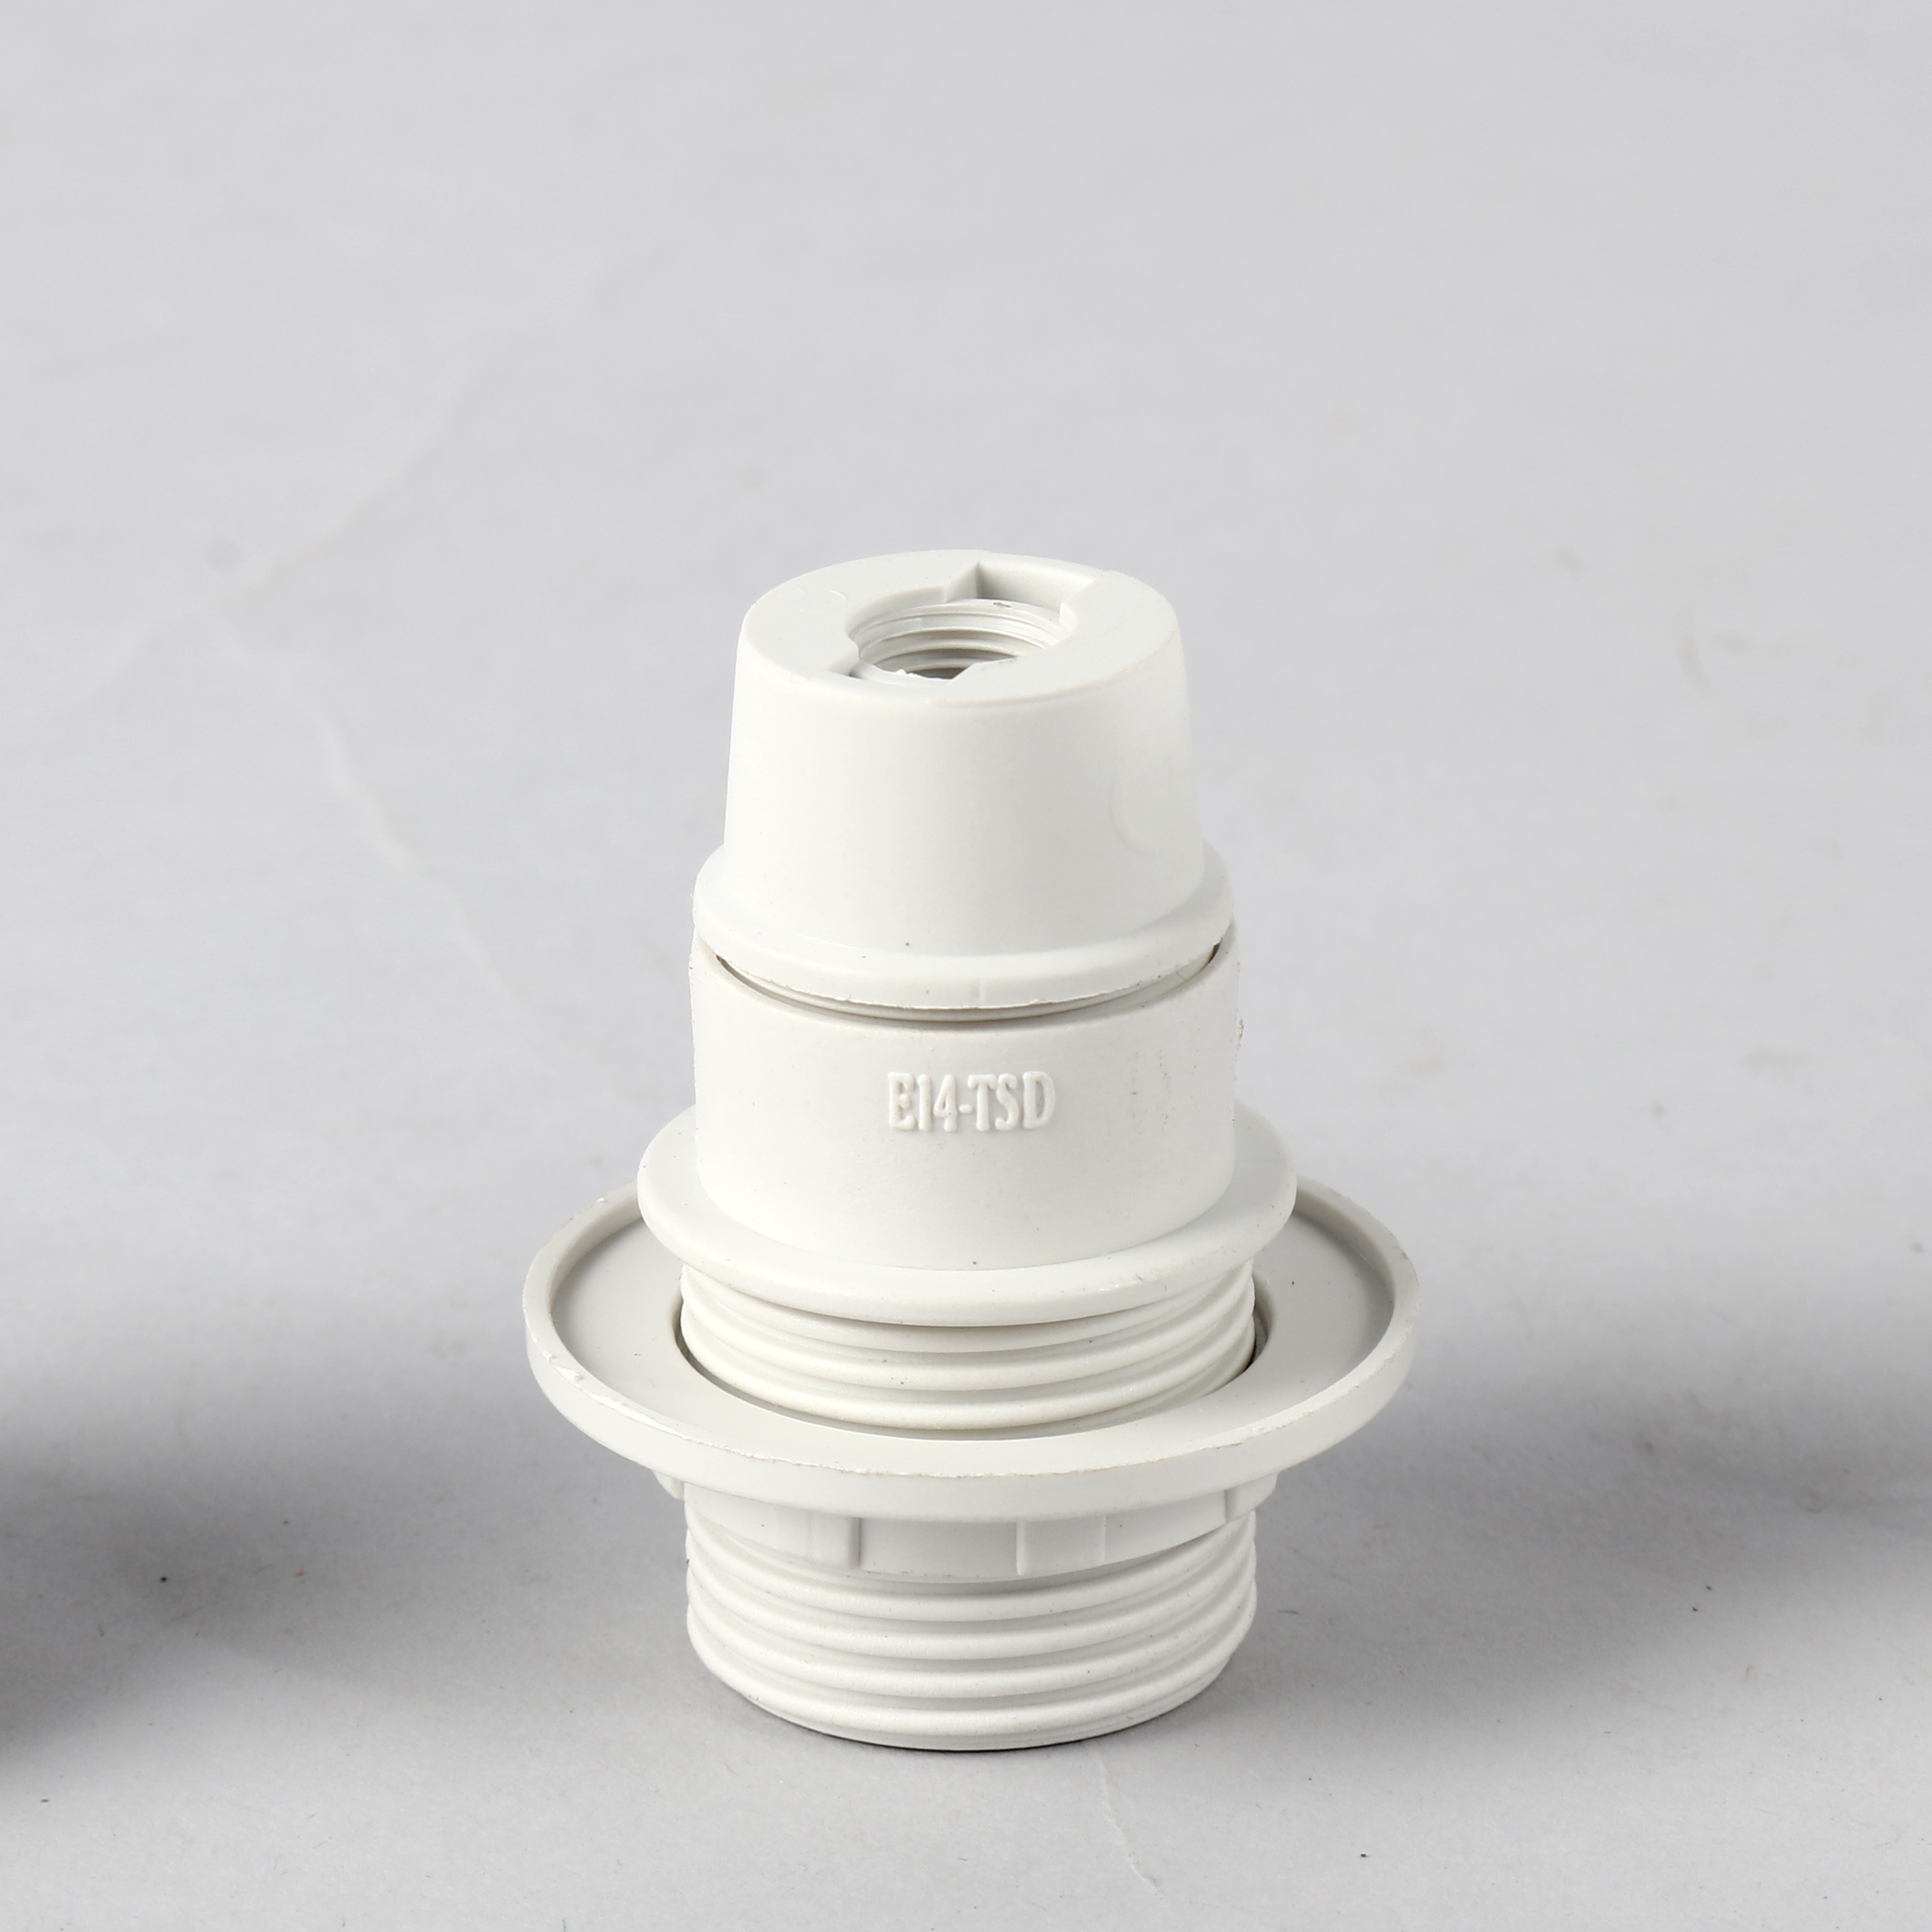 E14-TSD locked half-threaded lamp holder